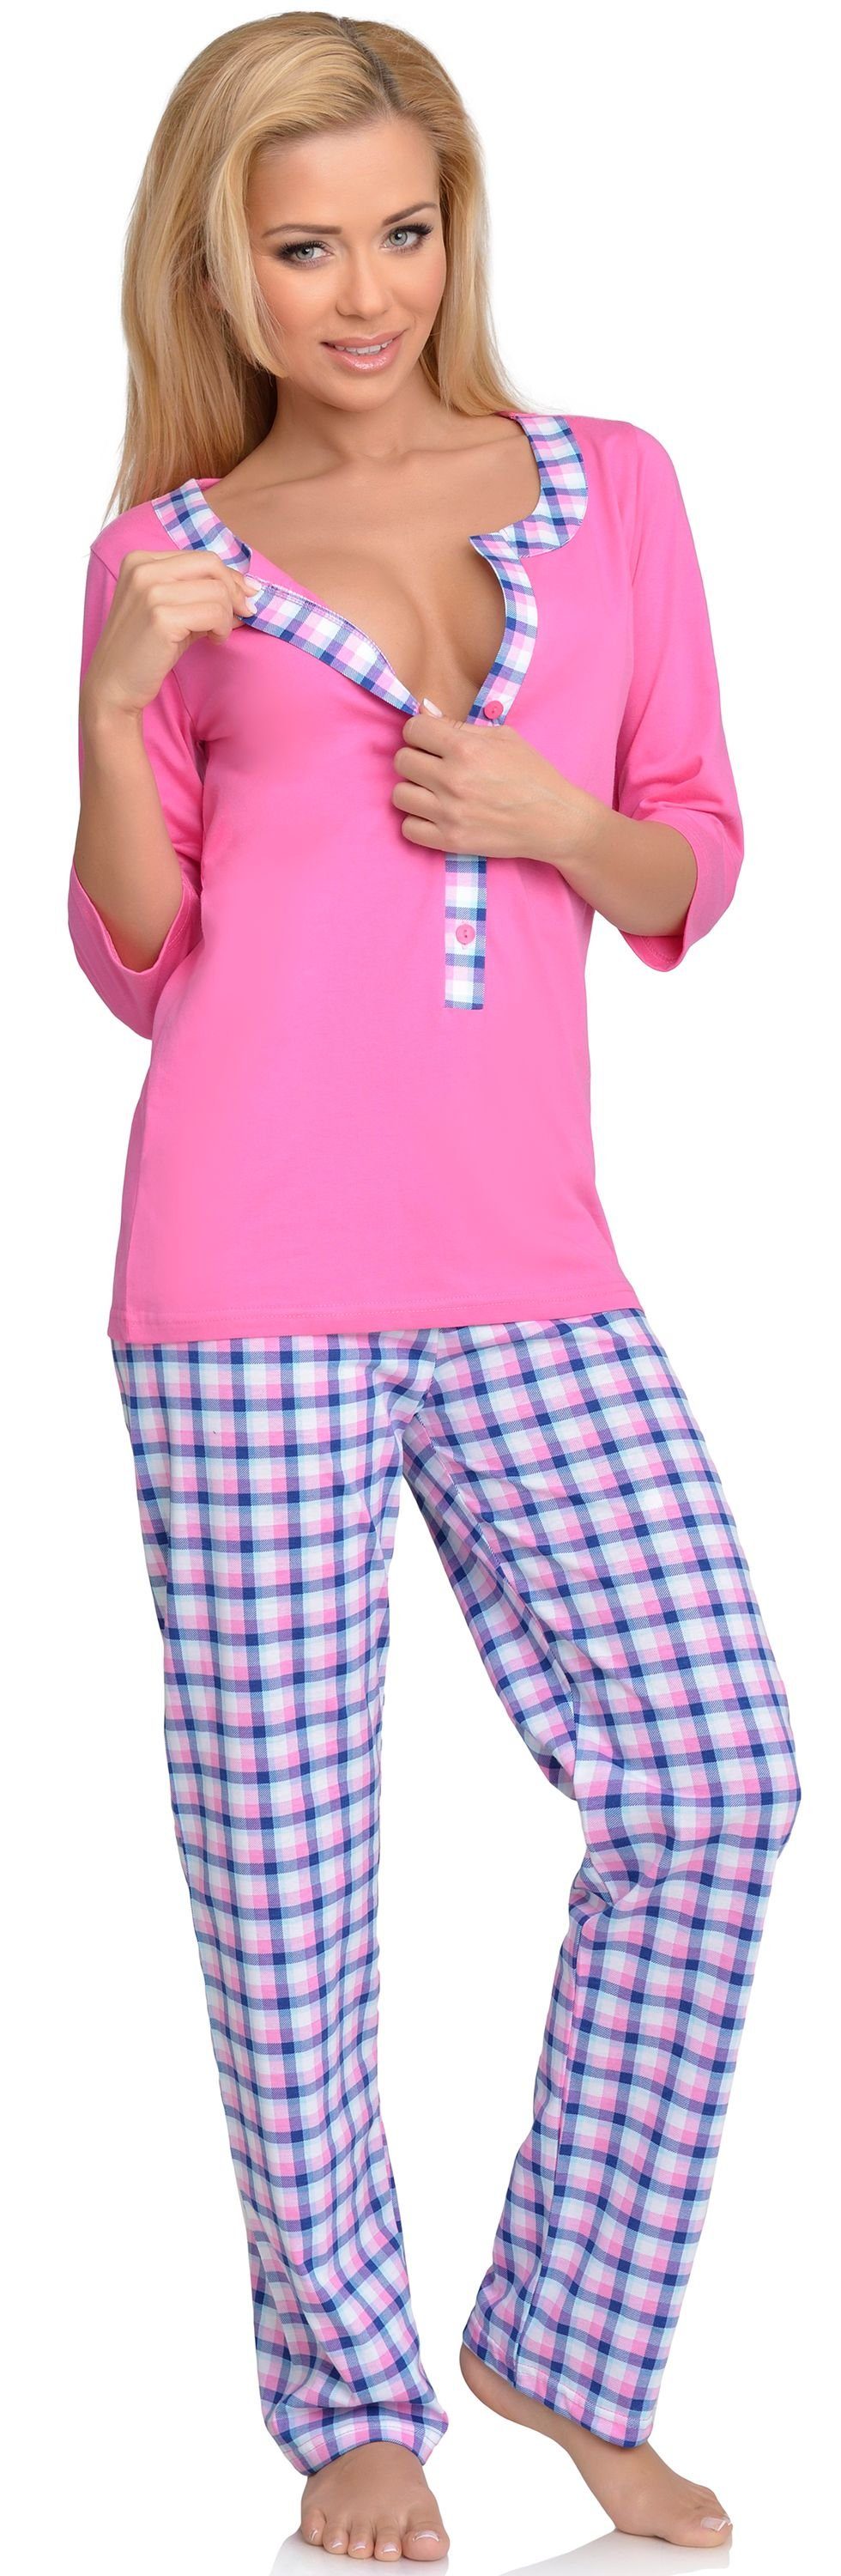 Be Mammy Umstandspyjama Damen Schlafanzug Stillpyjama Rosa-2 1N2TT2